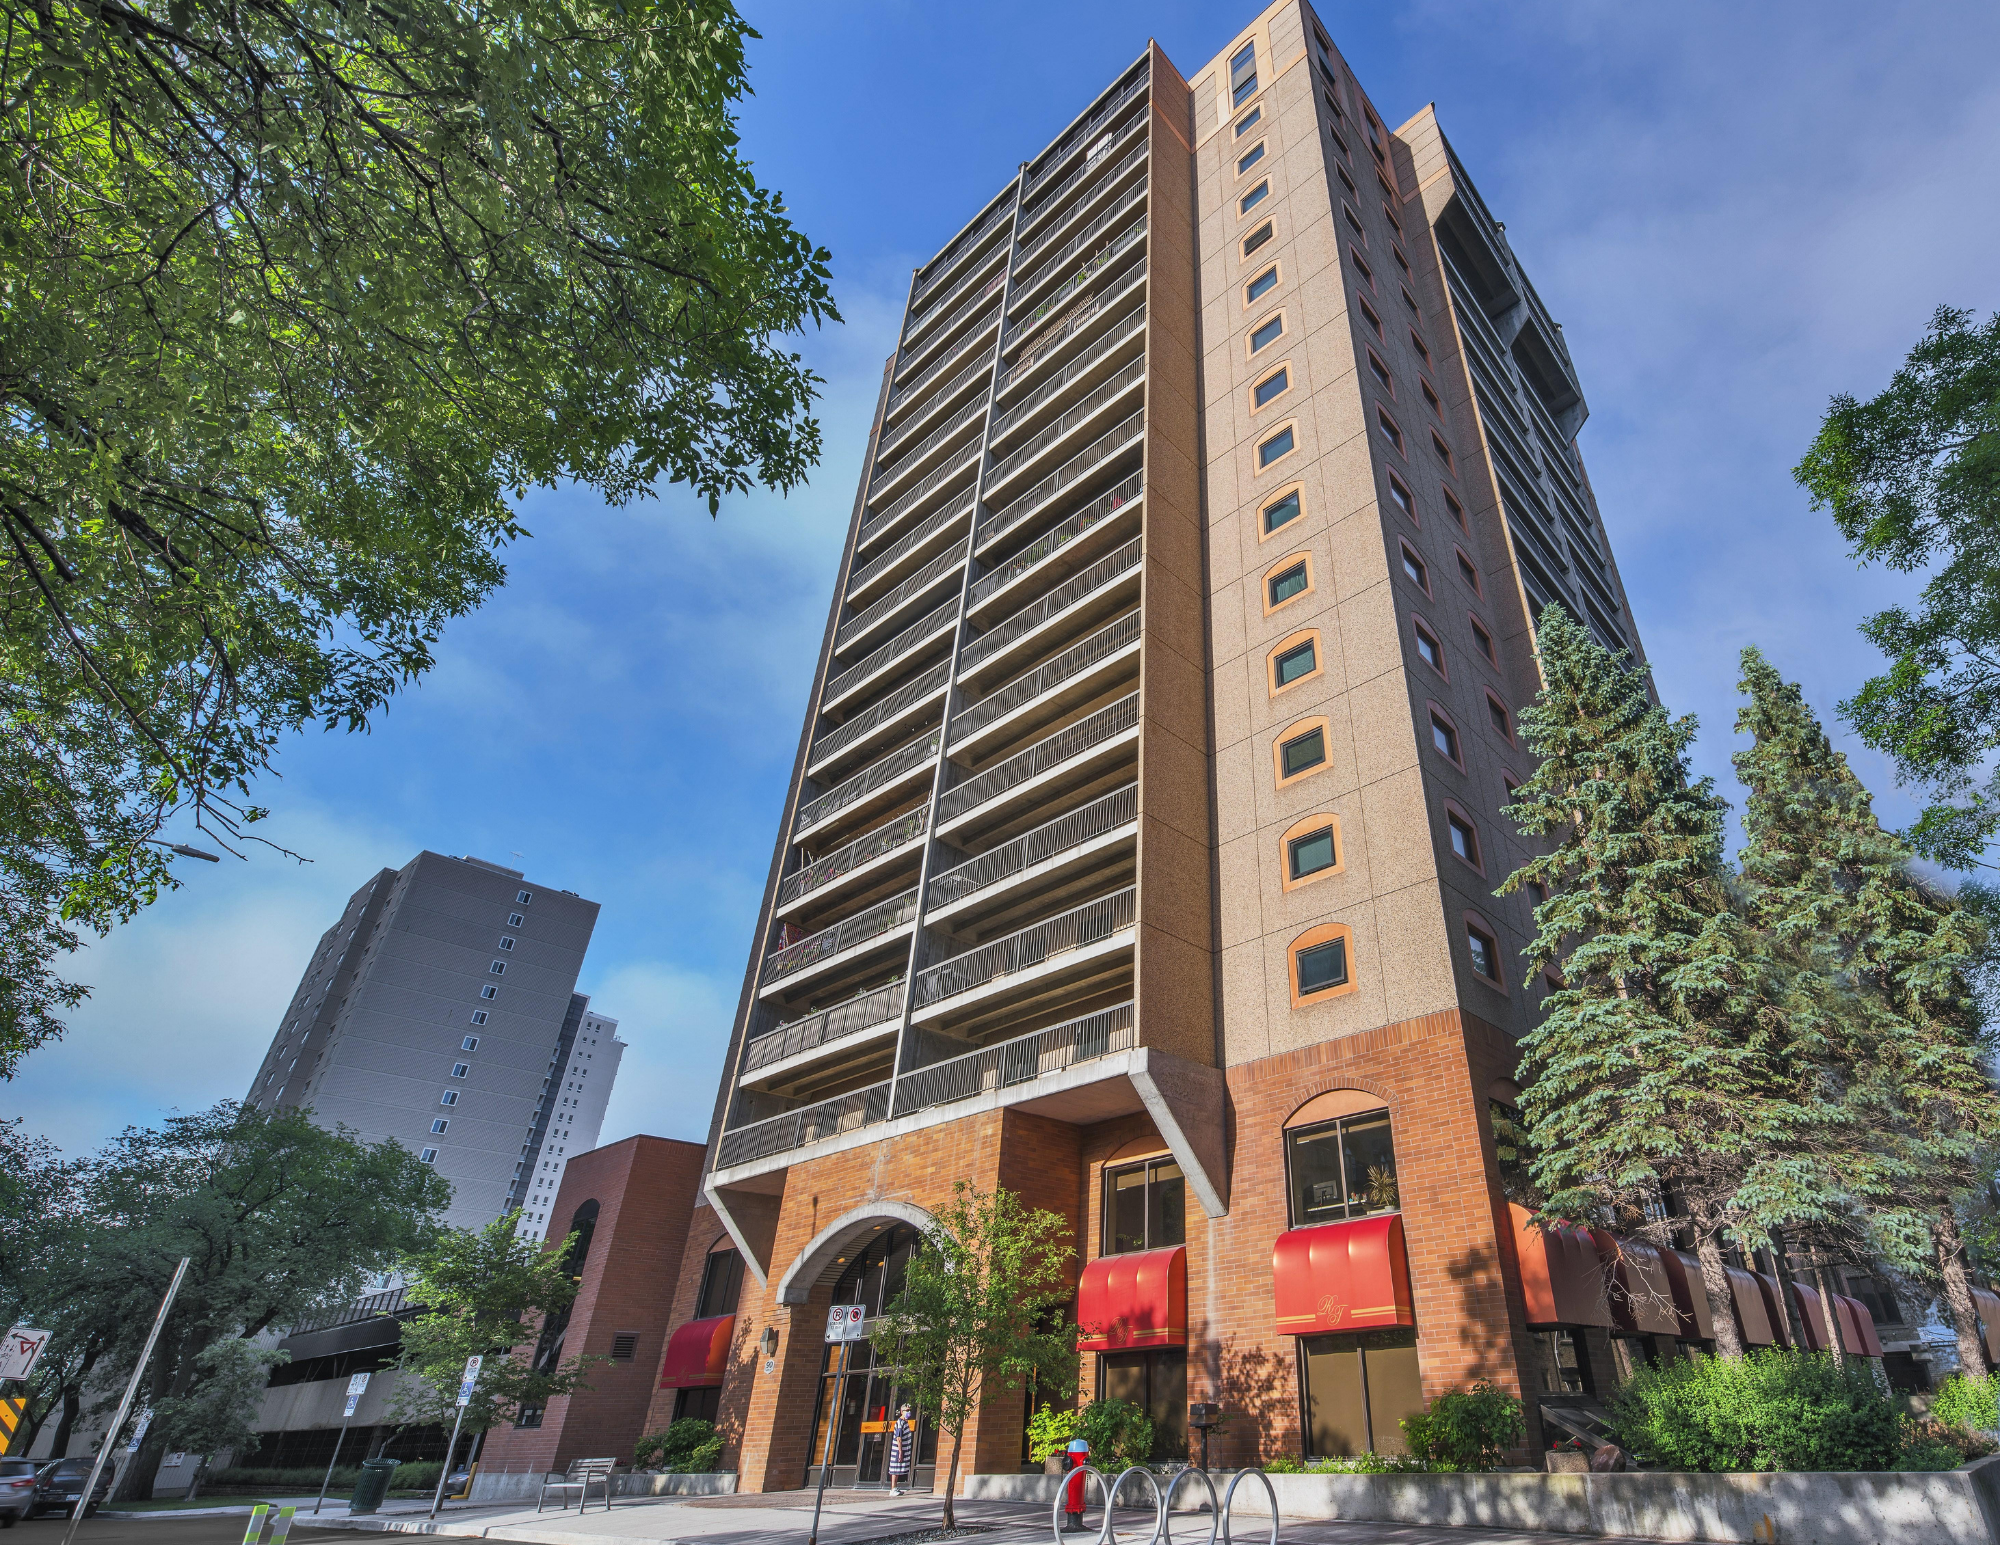 Globe Announces Acquisition of New Winnipeg Property